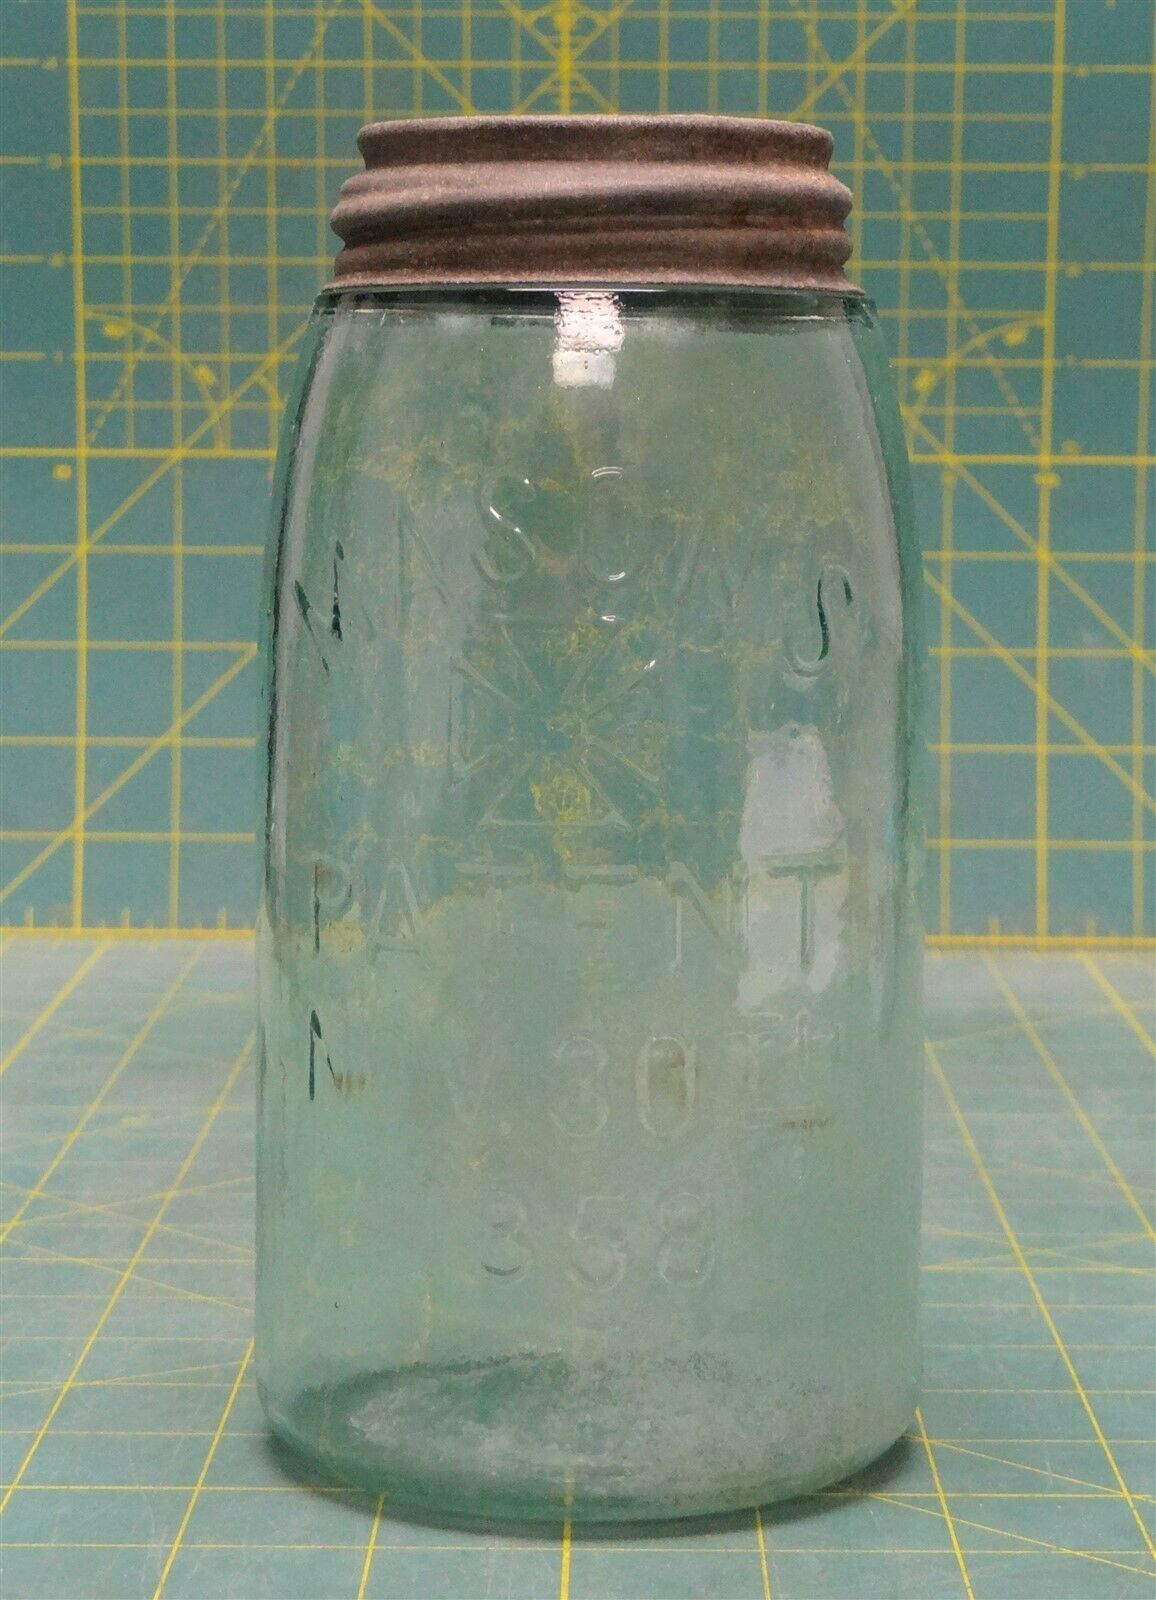 Mason's Jar Hero Cross Patent Nov 30th 1858, Aquamarine Glass, 1 Liter, Zinc Lid